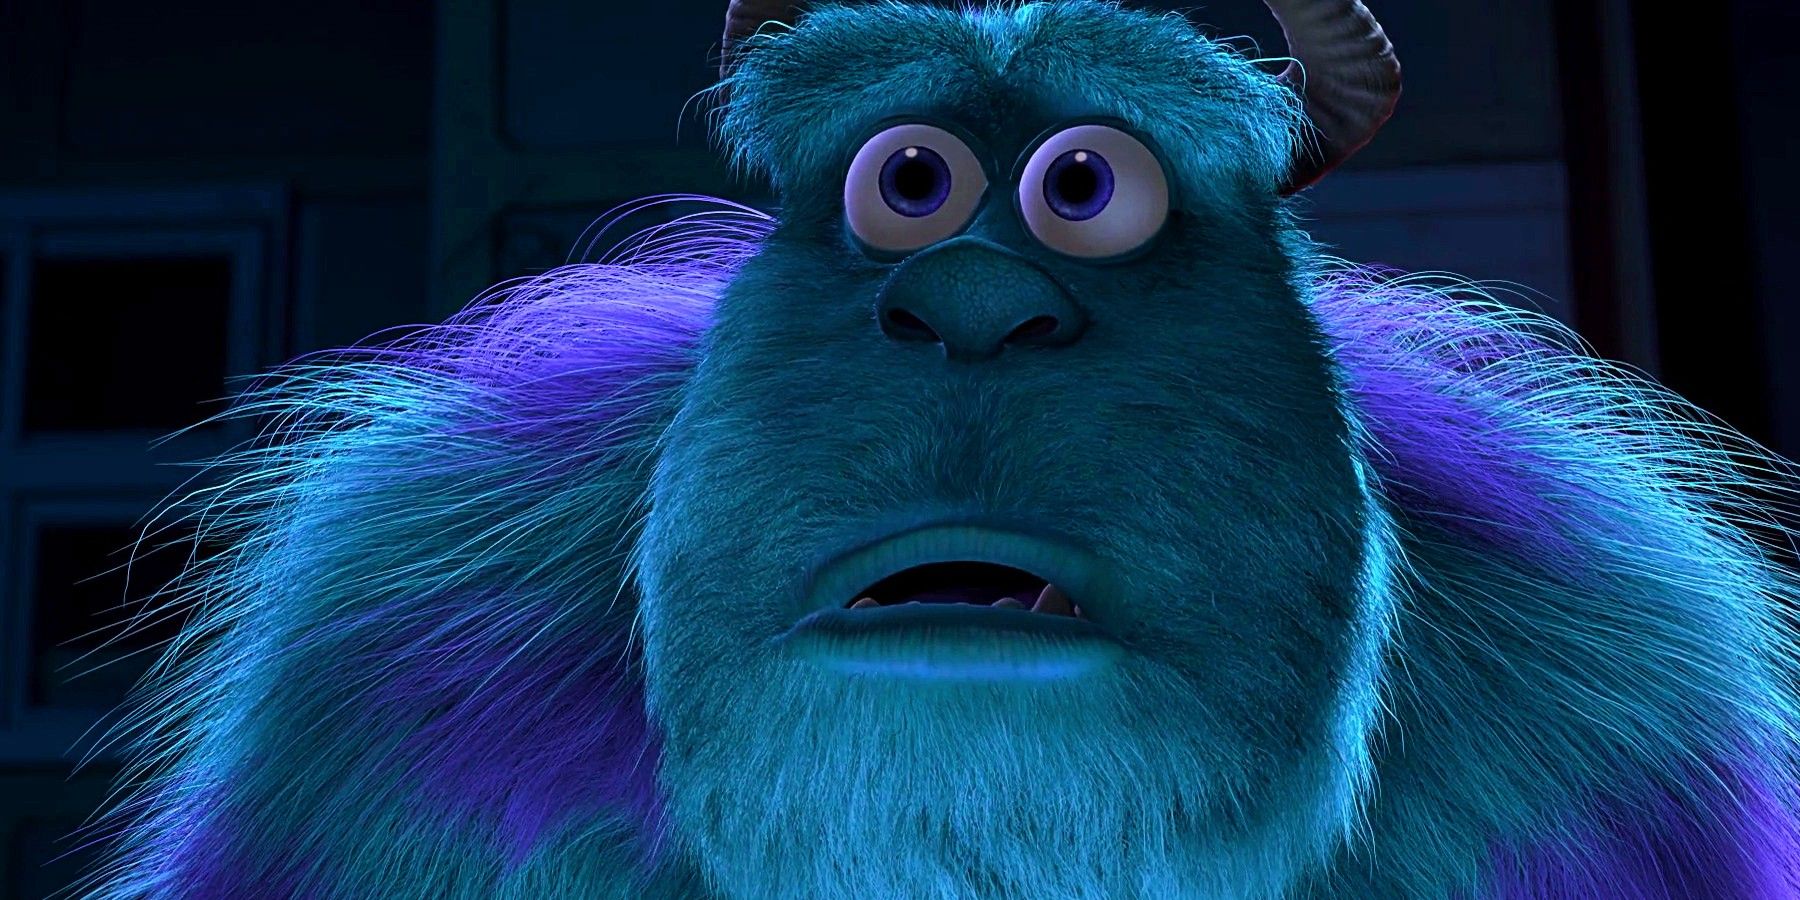 Pixar Becomes A Horror & Fantasy Factory In Disturbingly Adorable Art